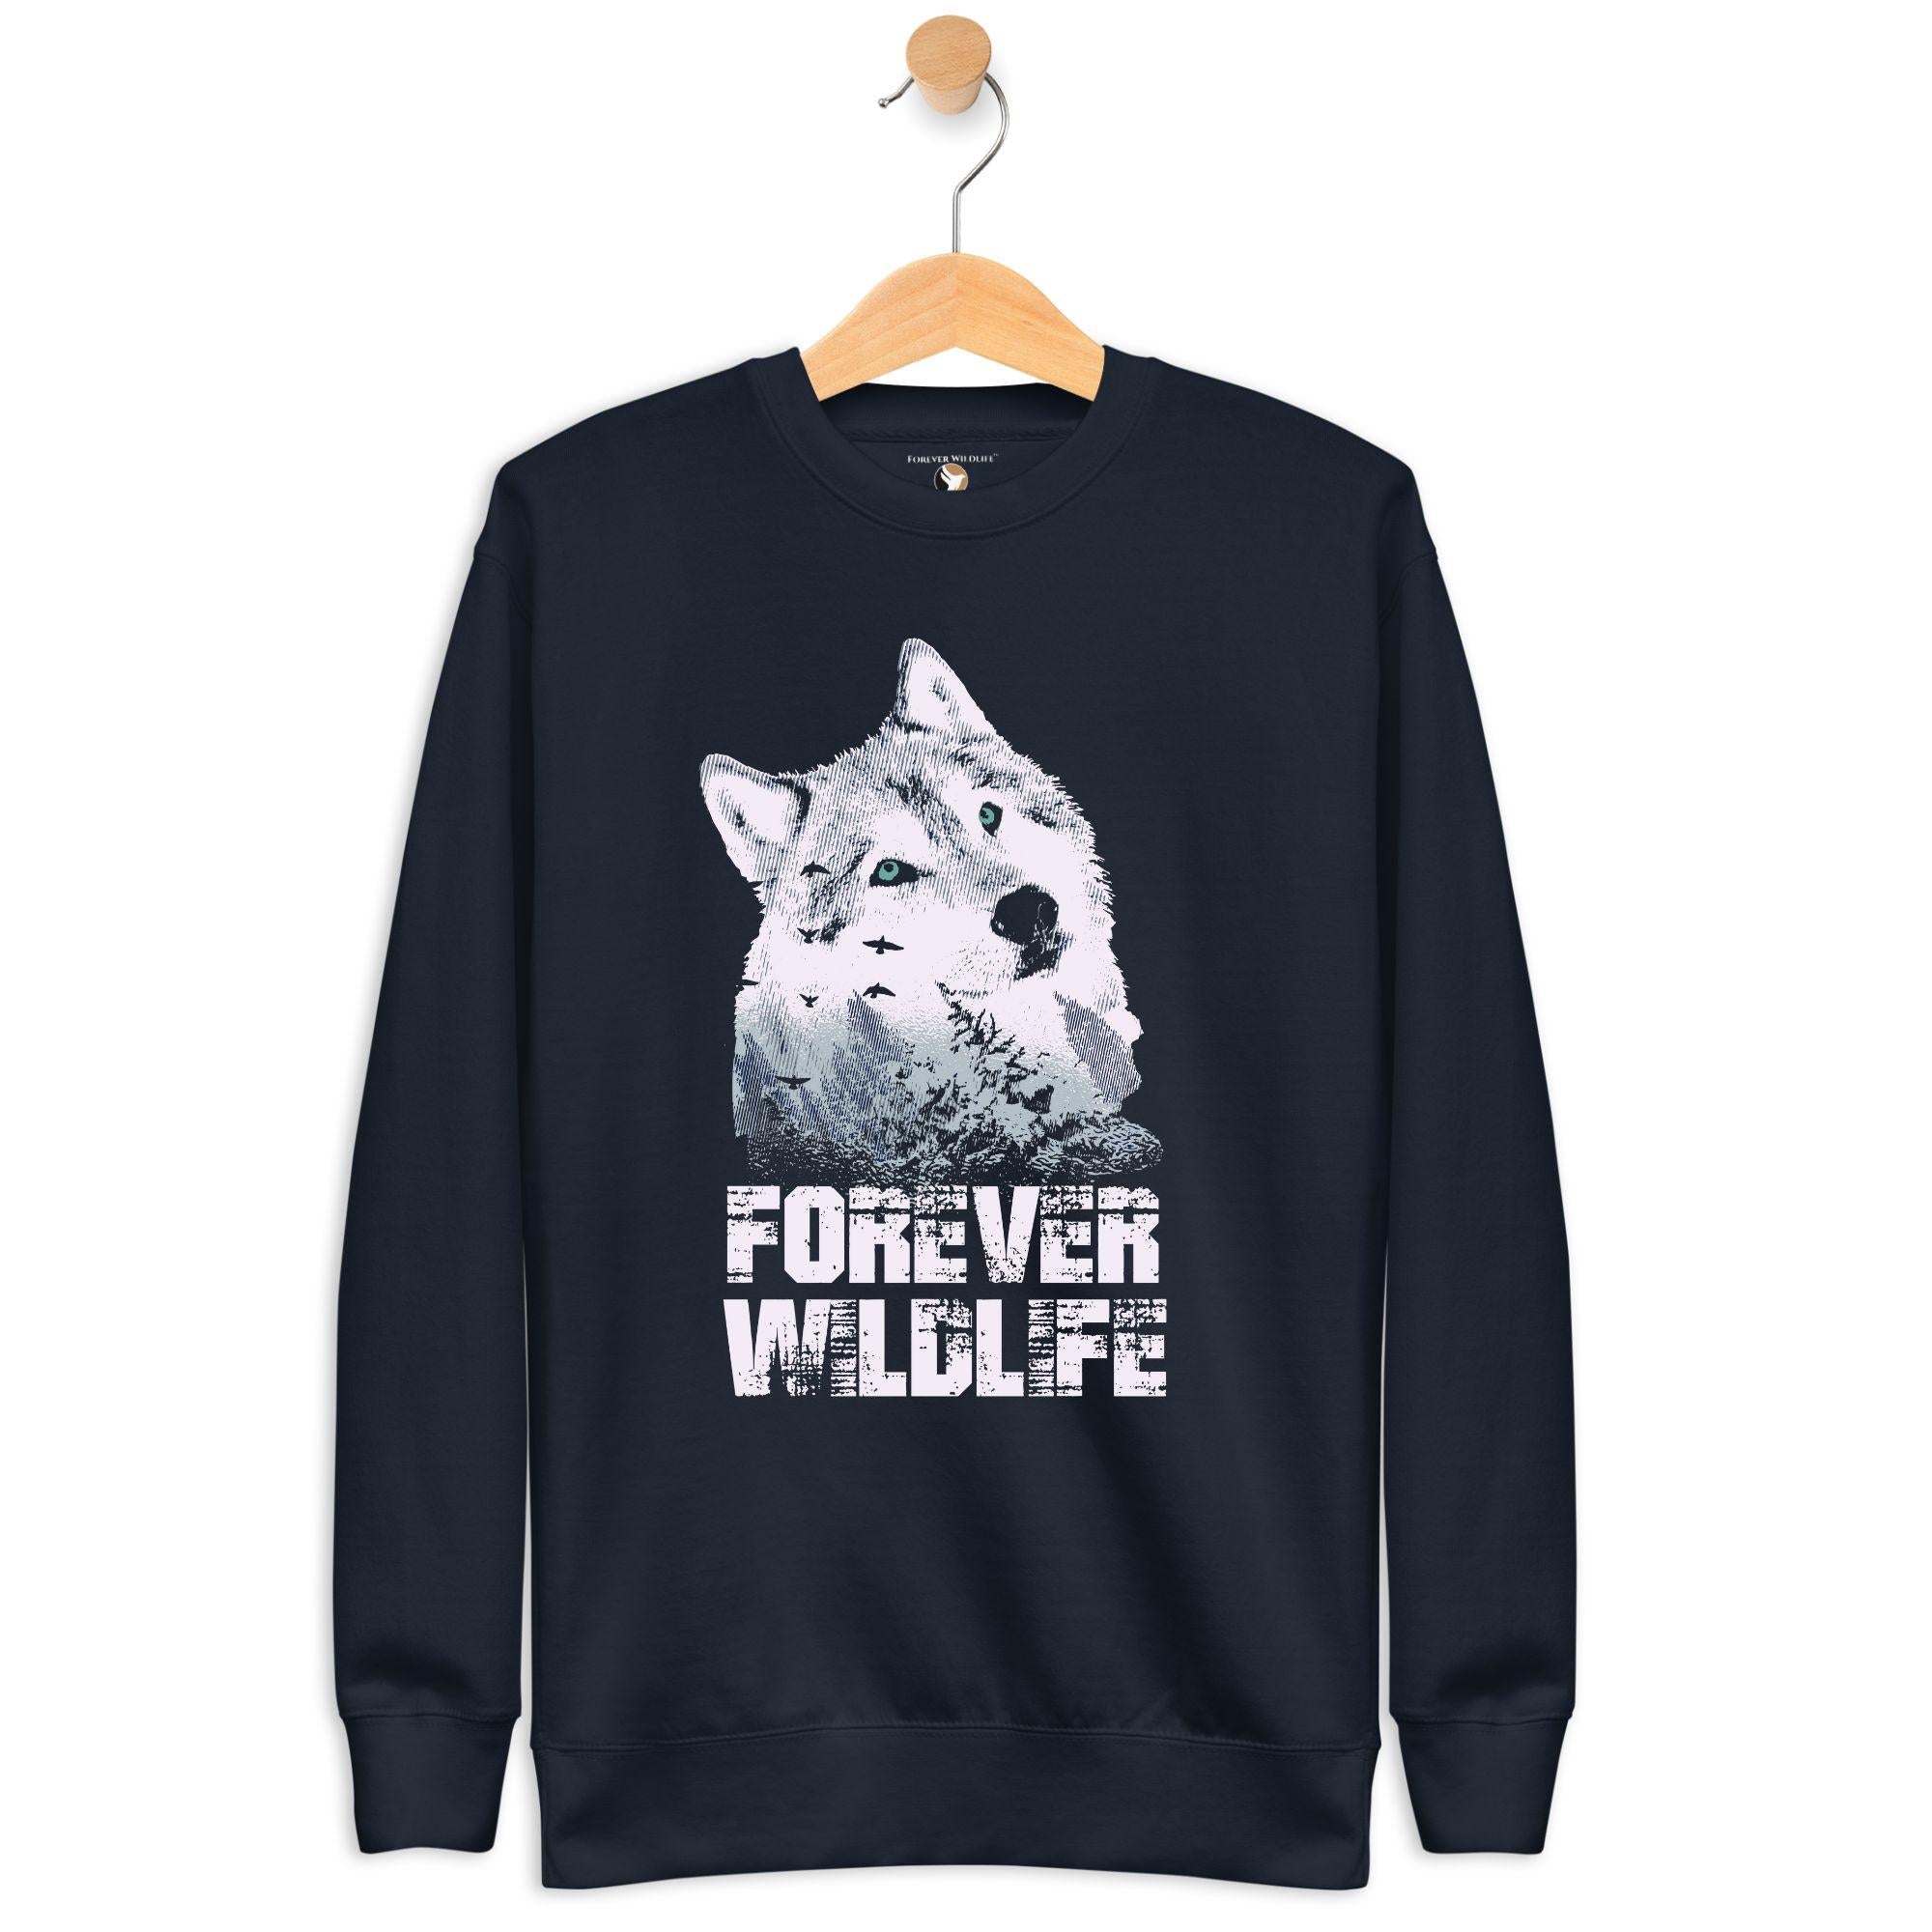 Wolf Sweatshirt in Navy-Premium Wildlife Animal Inspiration Sweatshirt Design, part of Wildlife Sweatshirts & Clothing from Forever Wildlife.